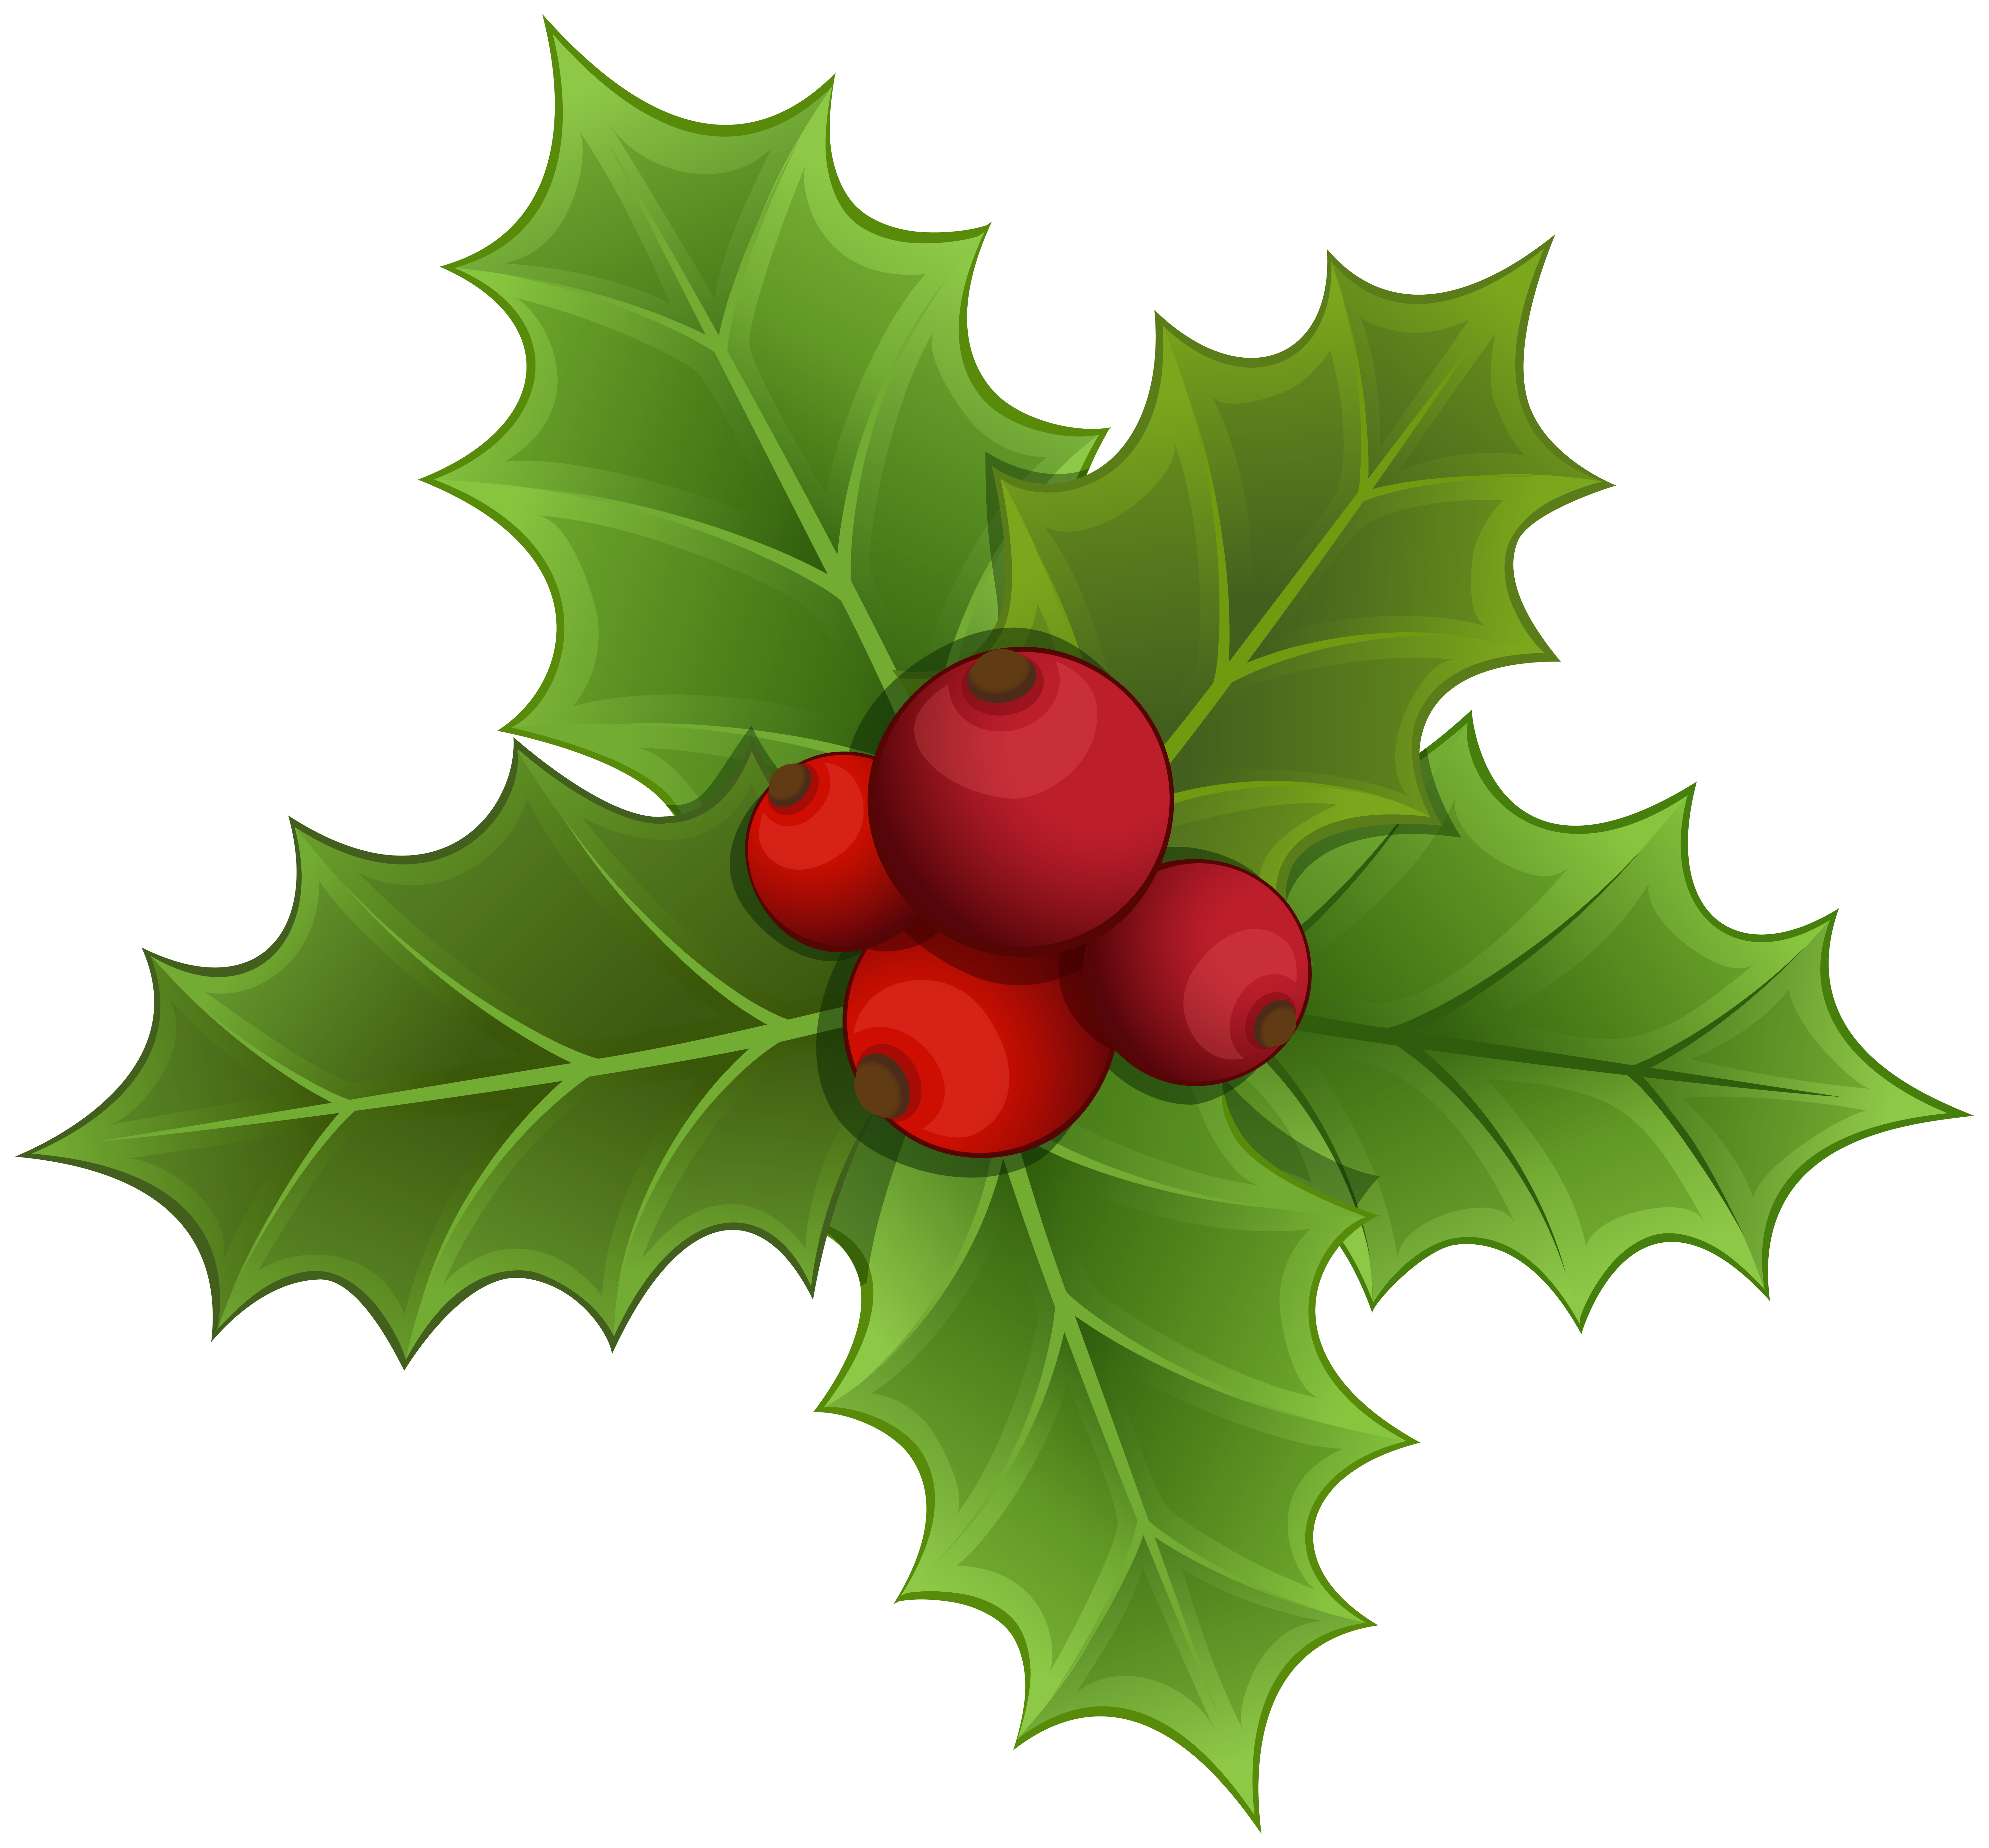 Mistletoe Christmas Clip art - Mistletoe PNG Clipart Image png download ...